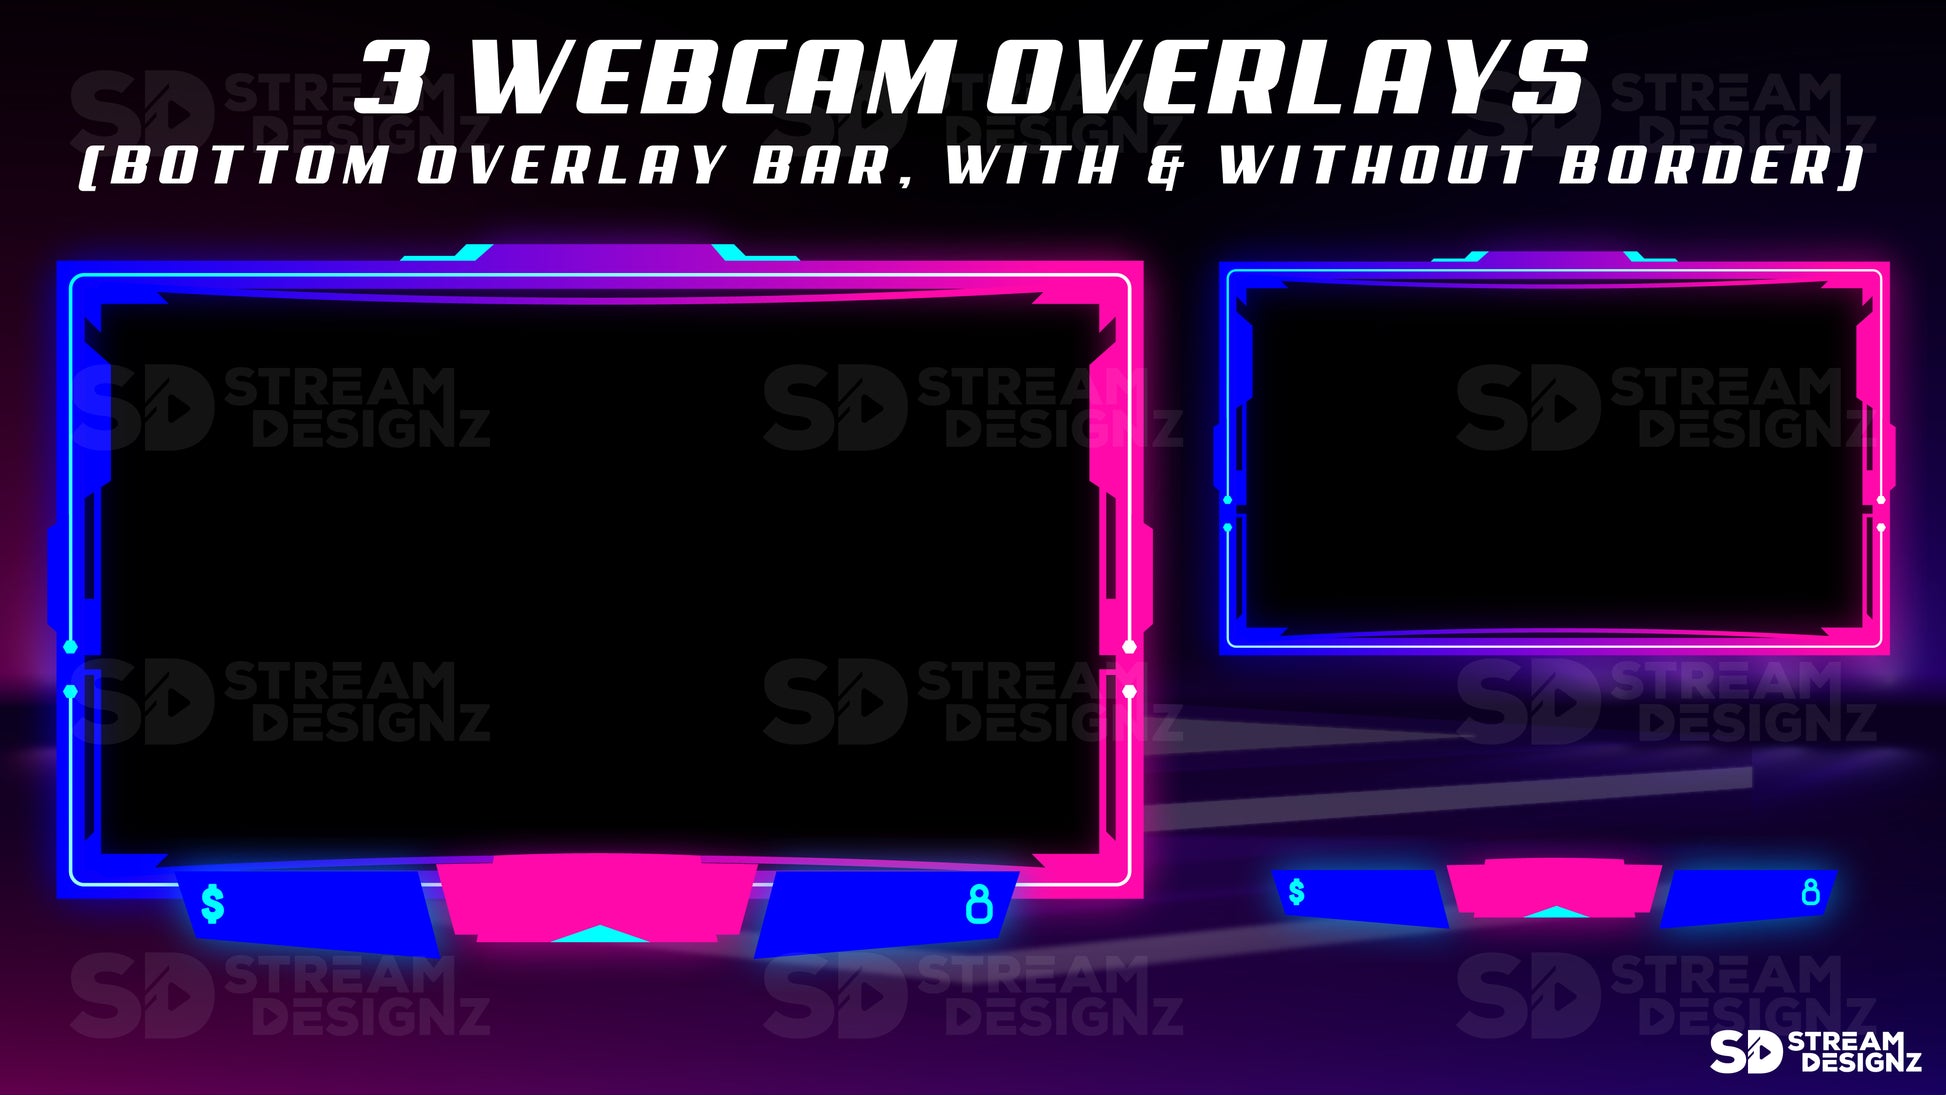 Static stream overlay package illuminate 3 webcam overlays stream designz